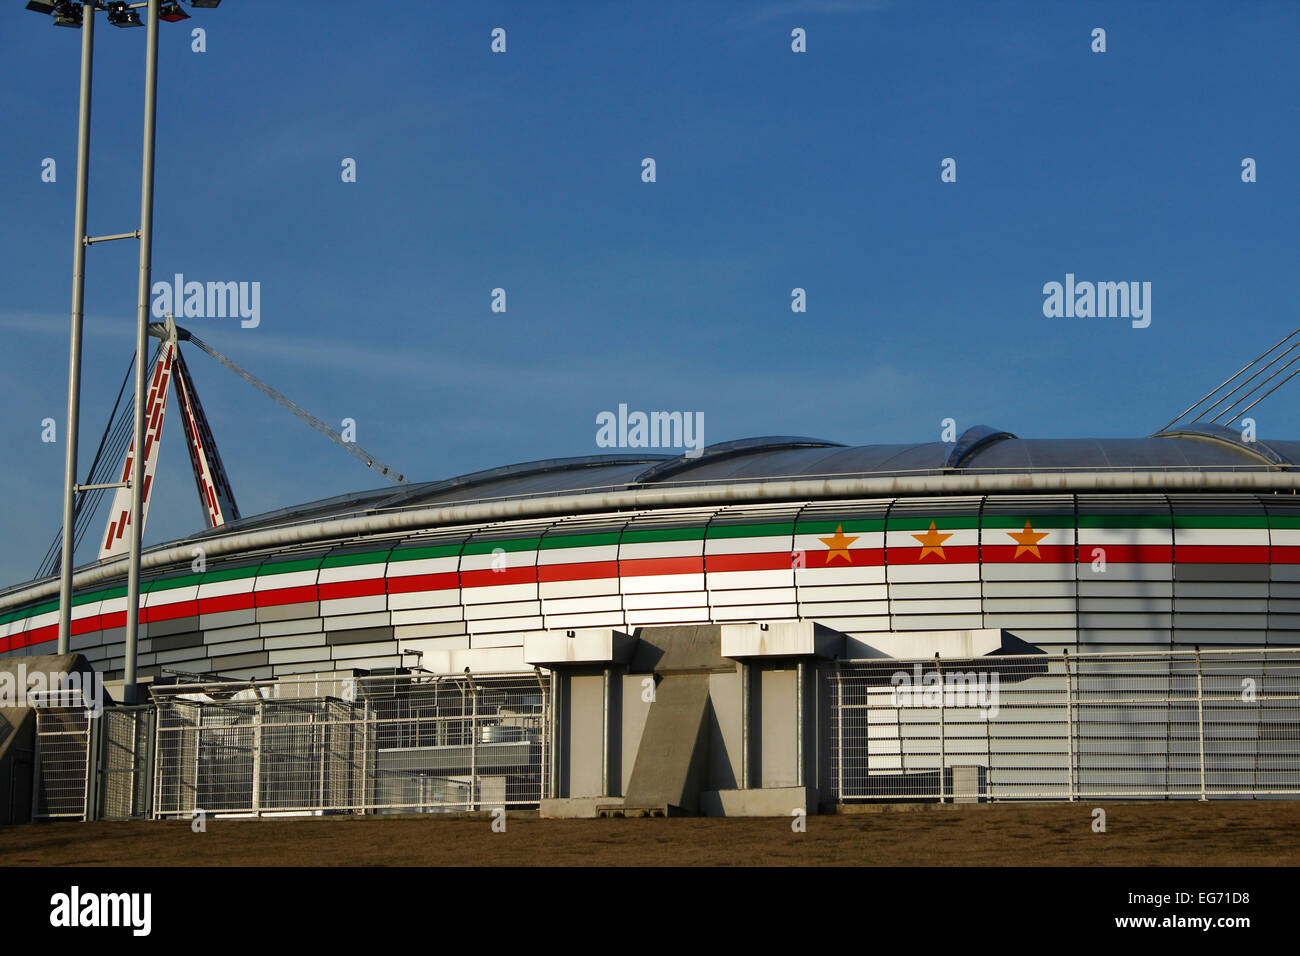 Juventus stadium hi-res stock photography and images - Alamy